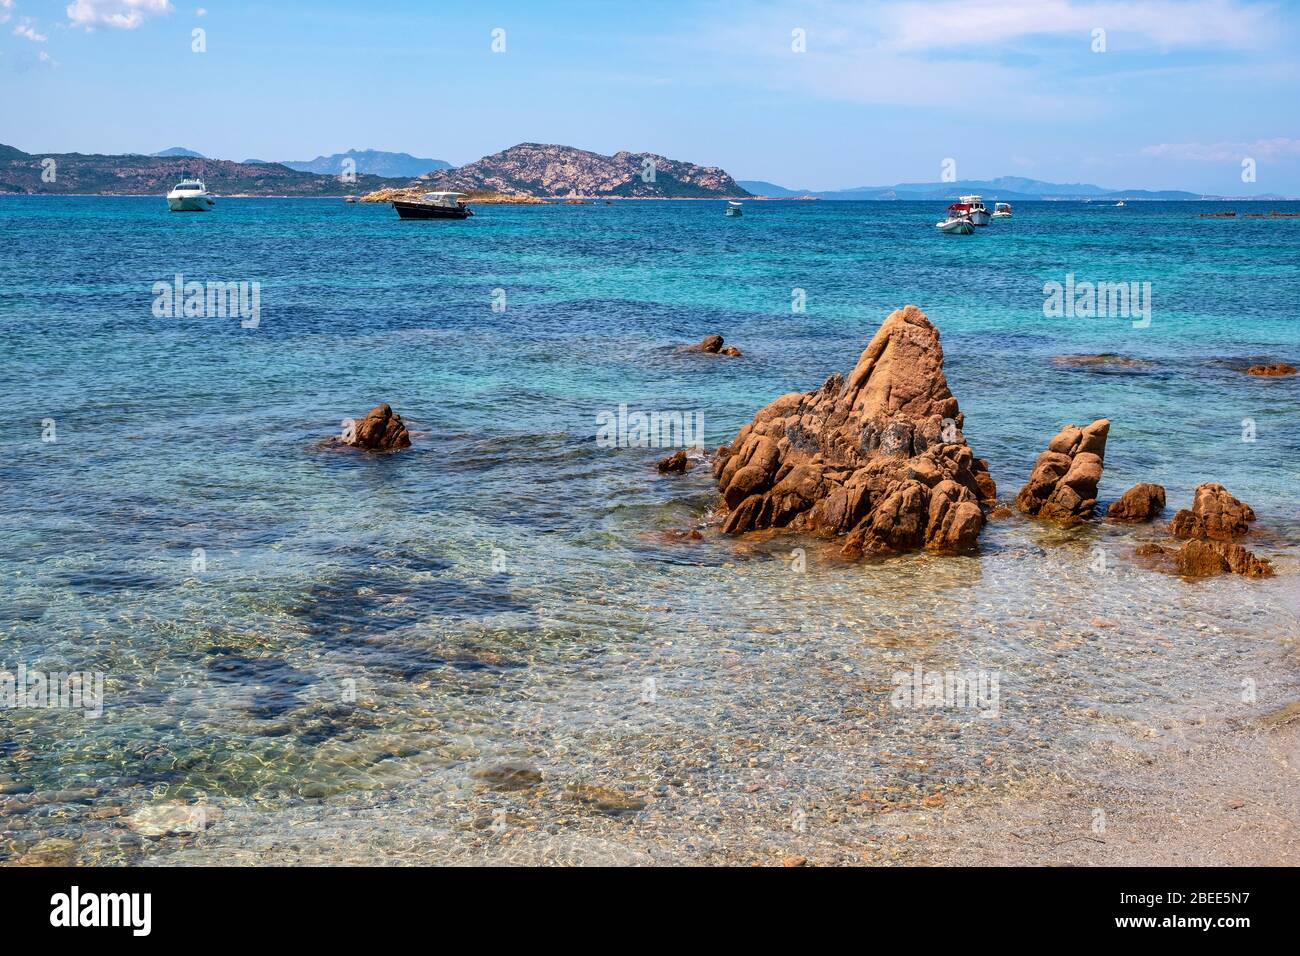 Tavolara, Sardinia / Italy - 2019/07/18: Picturesque Tyrrhenian Sea harbors with yachts offshore Isola Tavolara island off northern coast of Sardinia Stock Photo